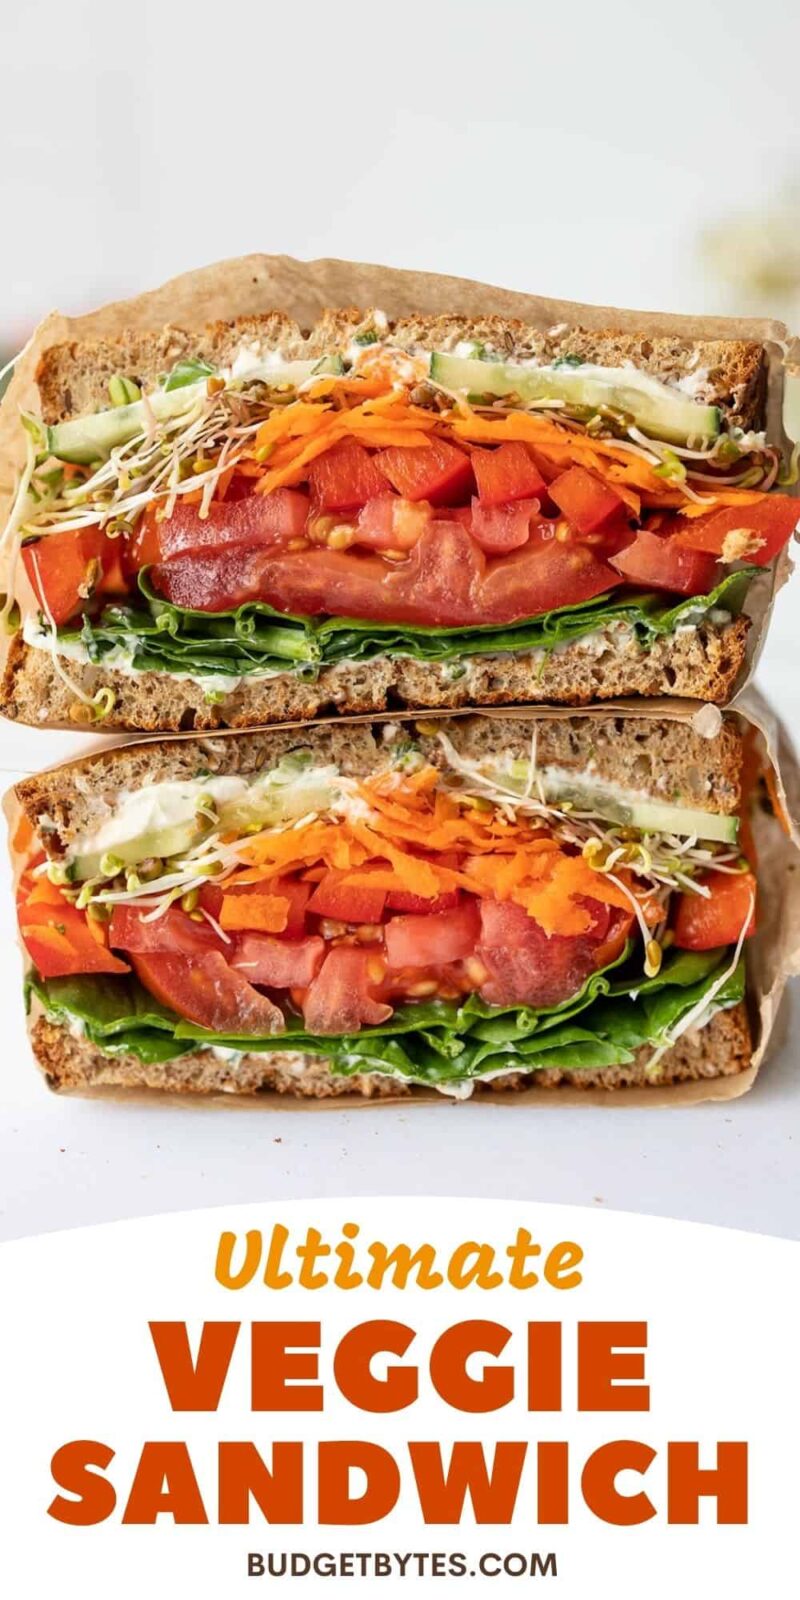 https://www.budgetbytes.com/wp-content/uploads/2021/08/Ultimate-Veggie-Sandwich-PIN4-800x1600.jpg